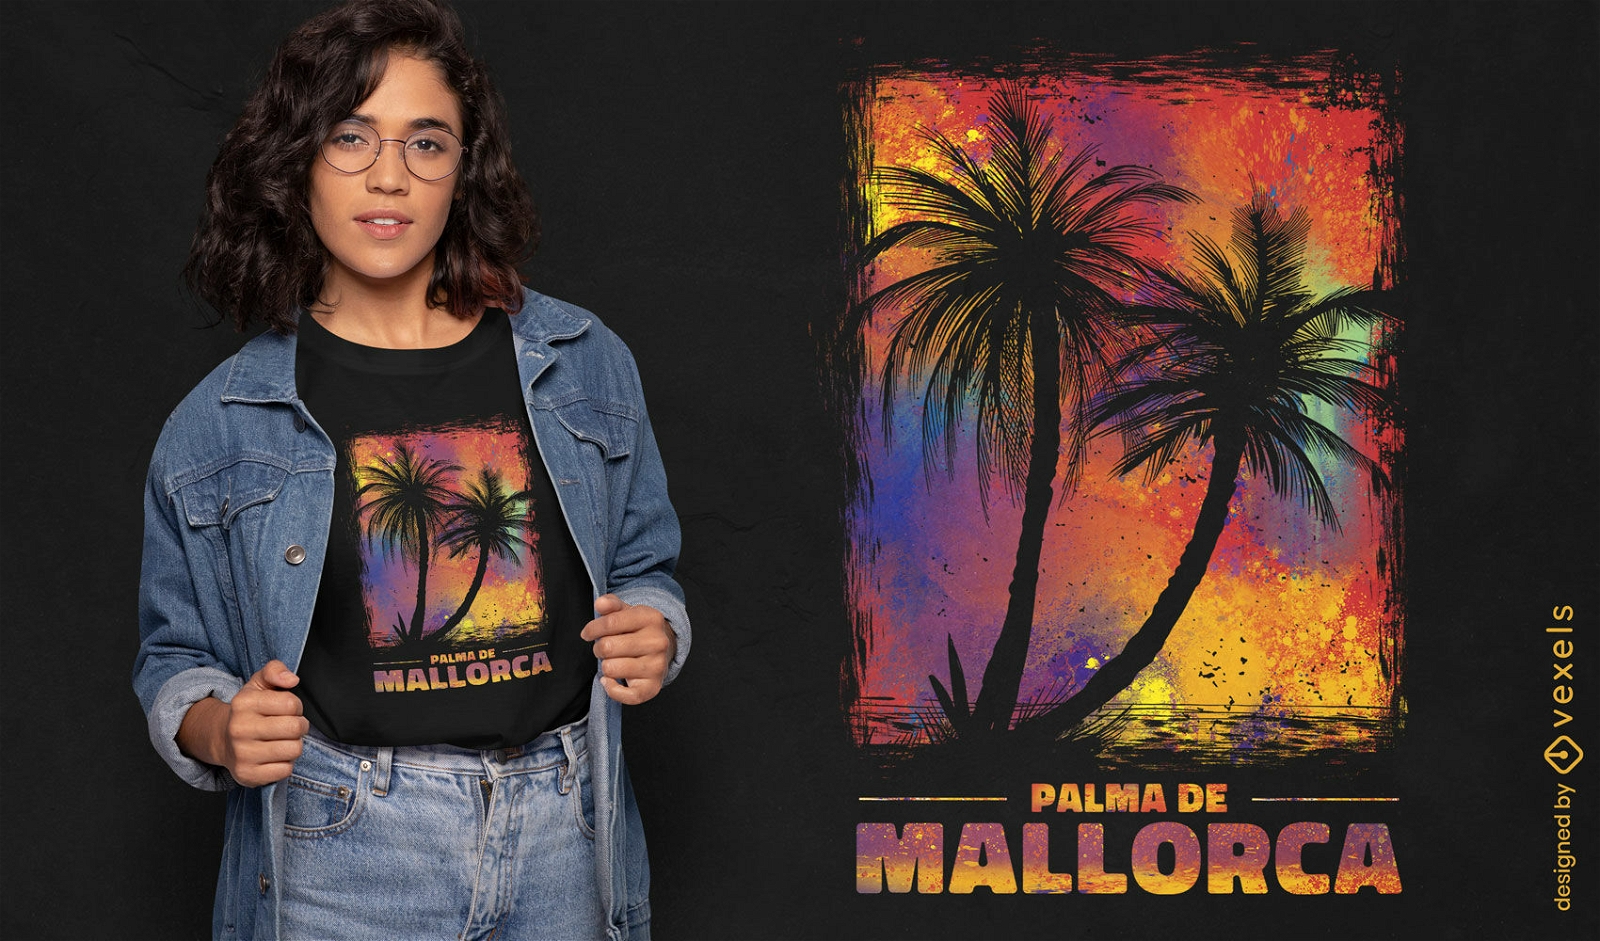 Palma de mallorca colorful t-shirt design